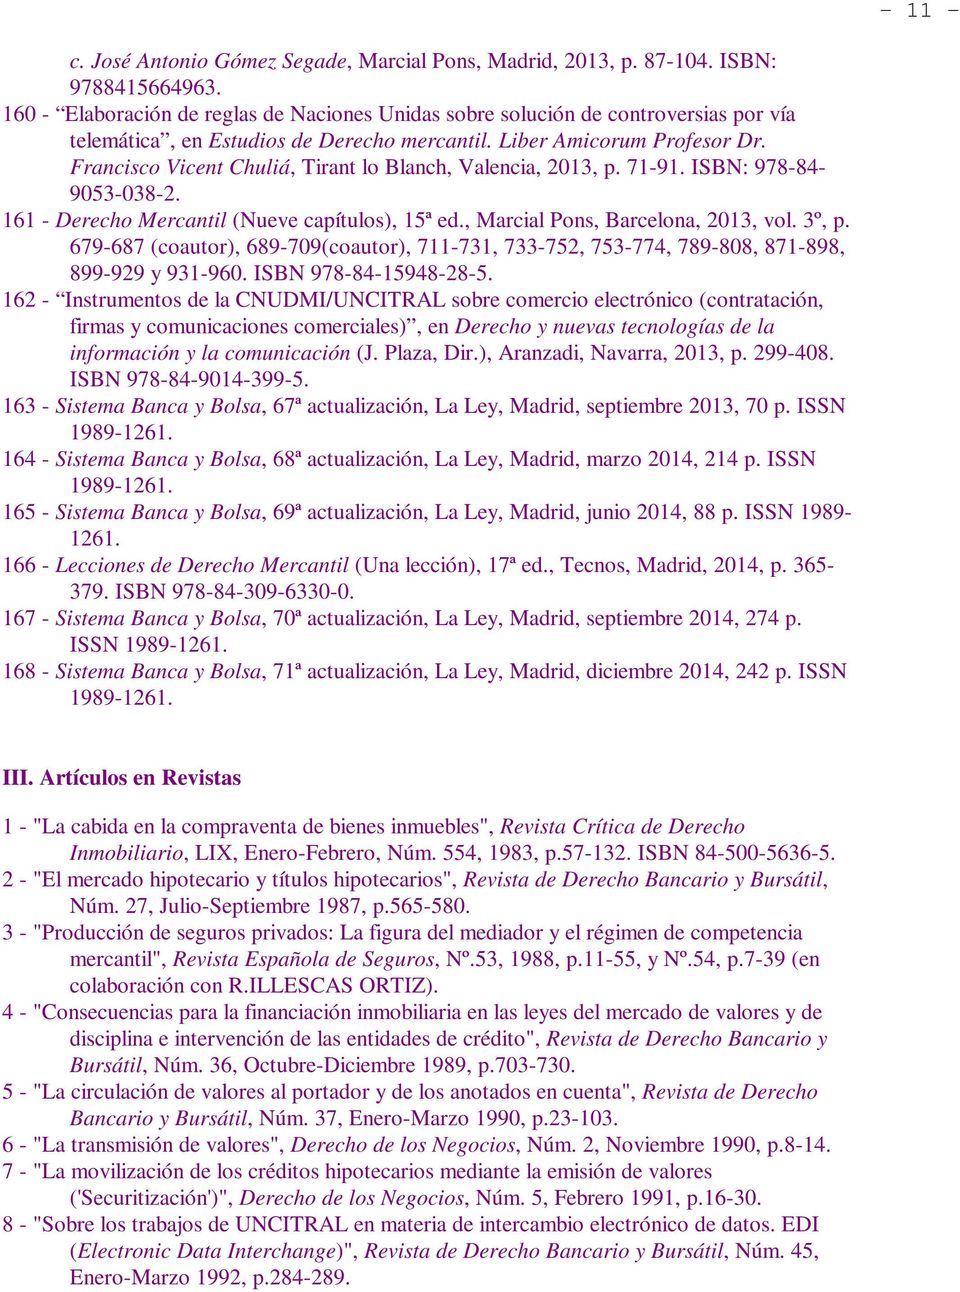 Francisco Vicent Chuliá, Tirant lo Blanch, Valencia, 2013, p. 71-91. ISBN: 978-84- 9053-038-2. 161 - Derecho Mercantil (Nueve capítulos), 15ª ed., Marcial Pons, Barcelona, 2013, vol. 3º, p.